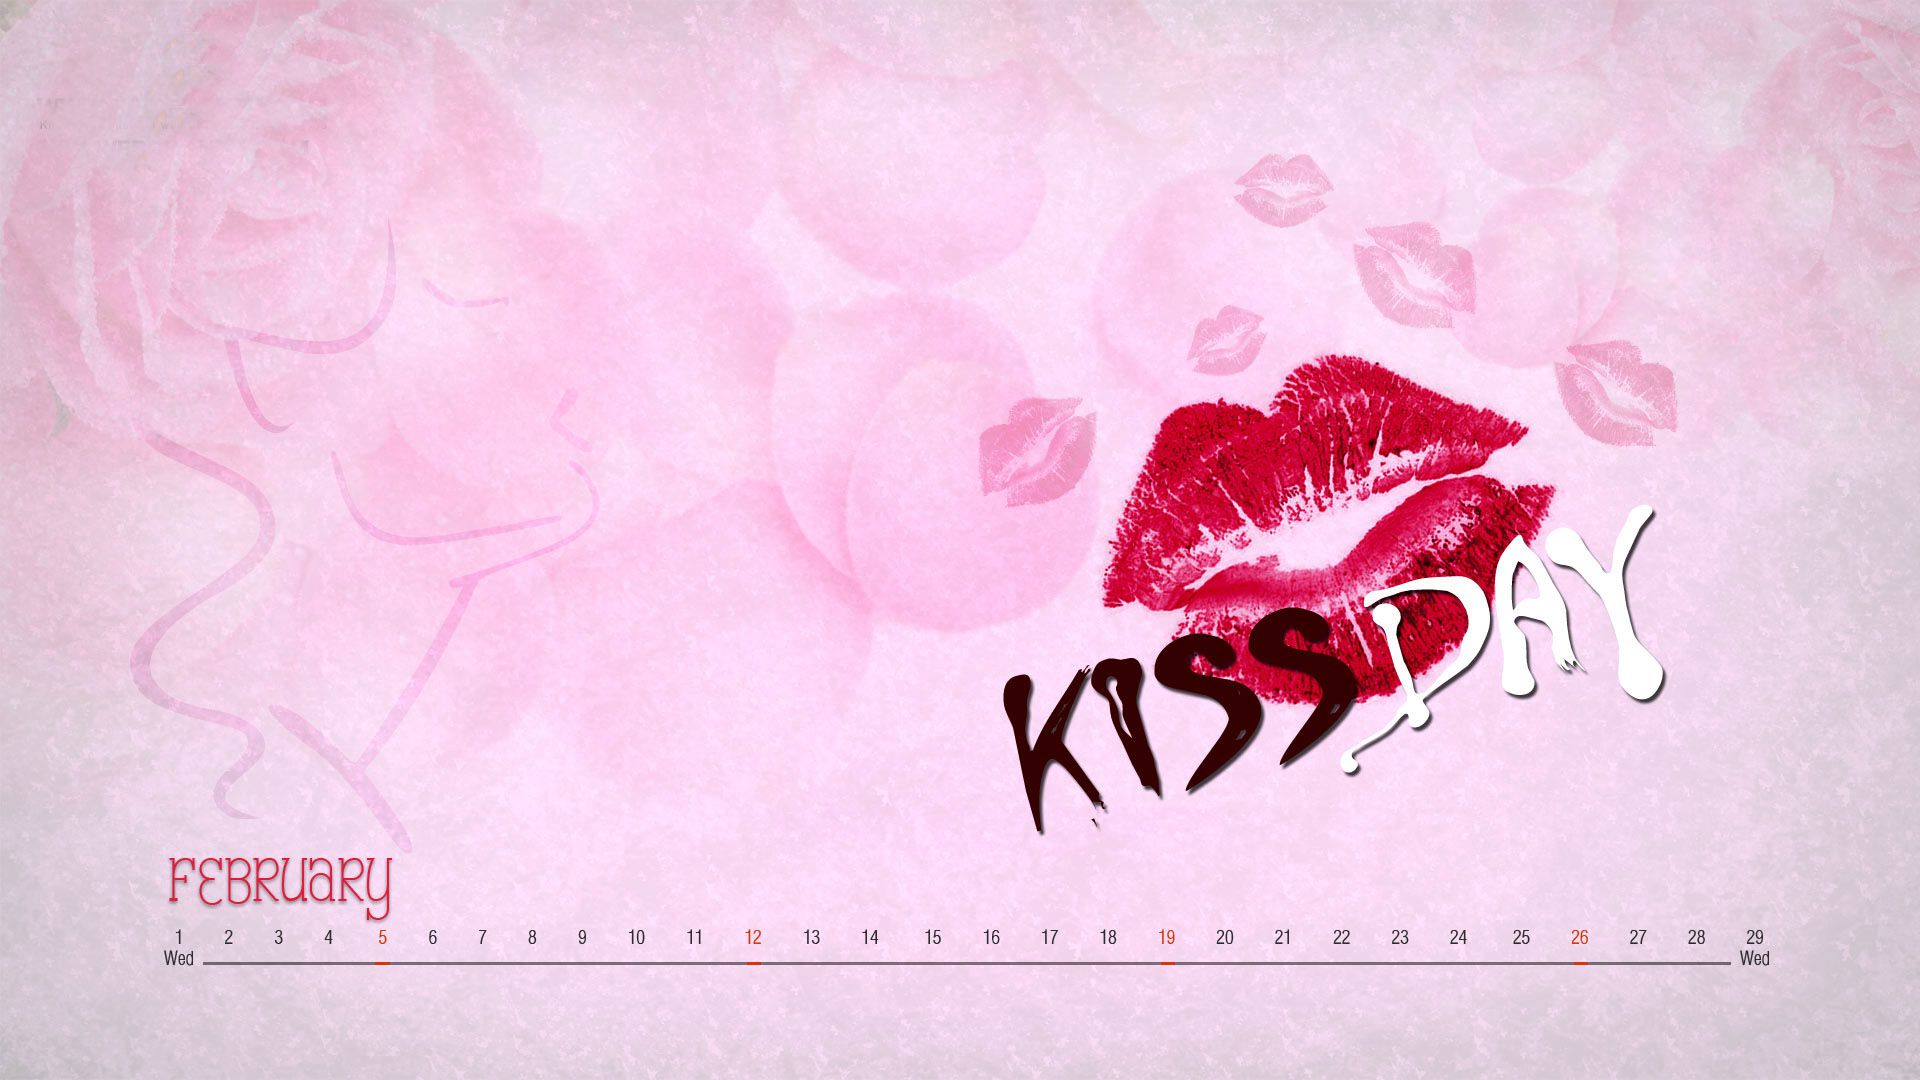 Kiss Day Wallpaper For Mobile Desktop4 Cgfrog Daily Design